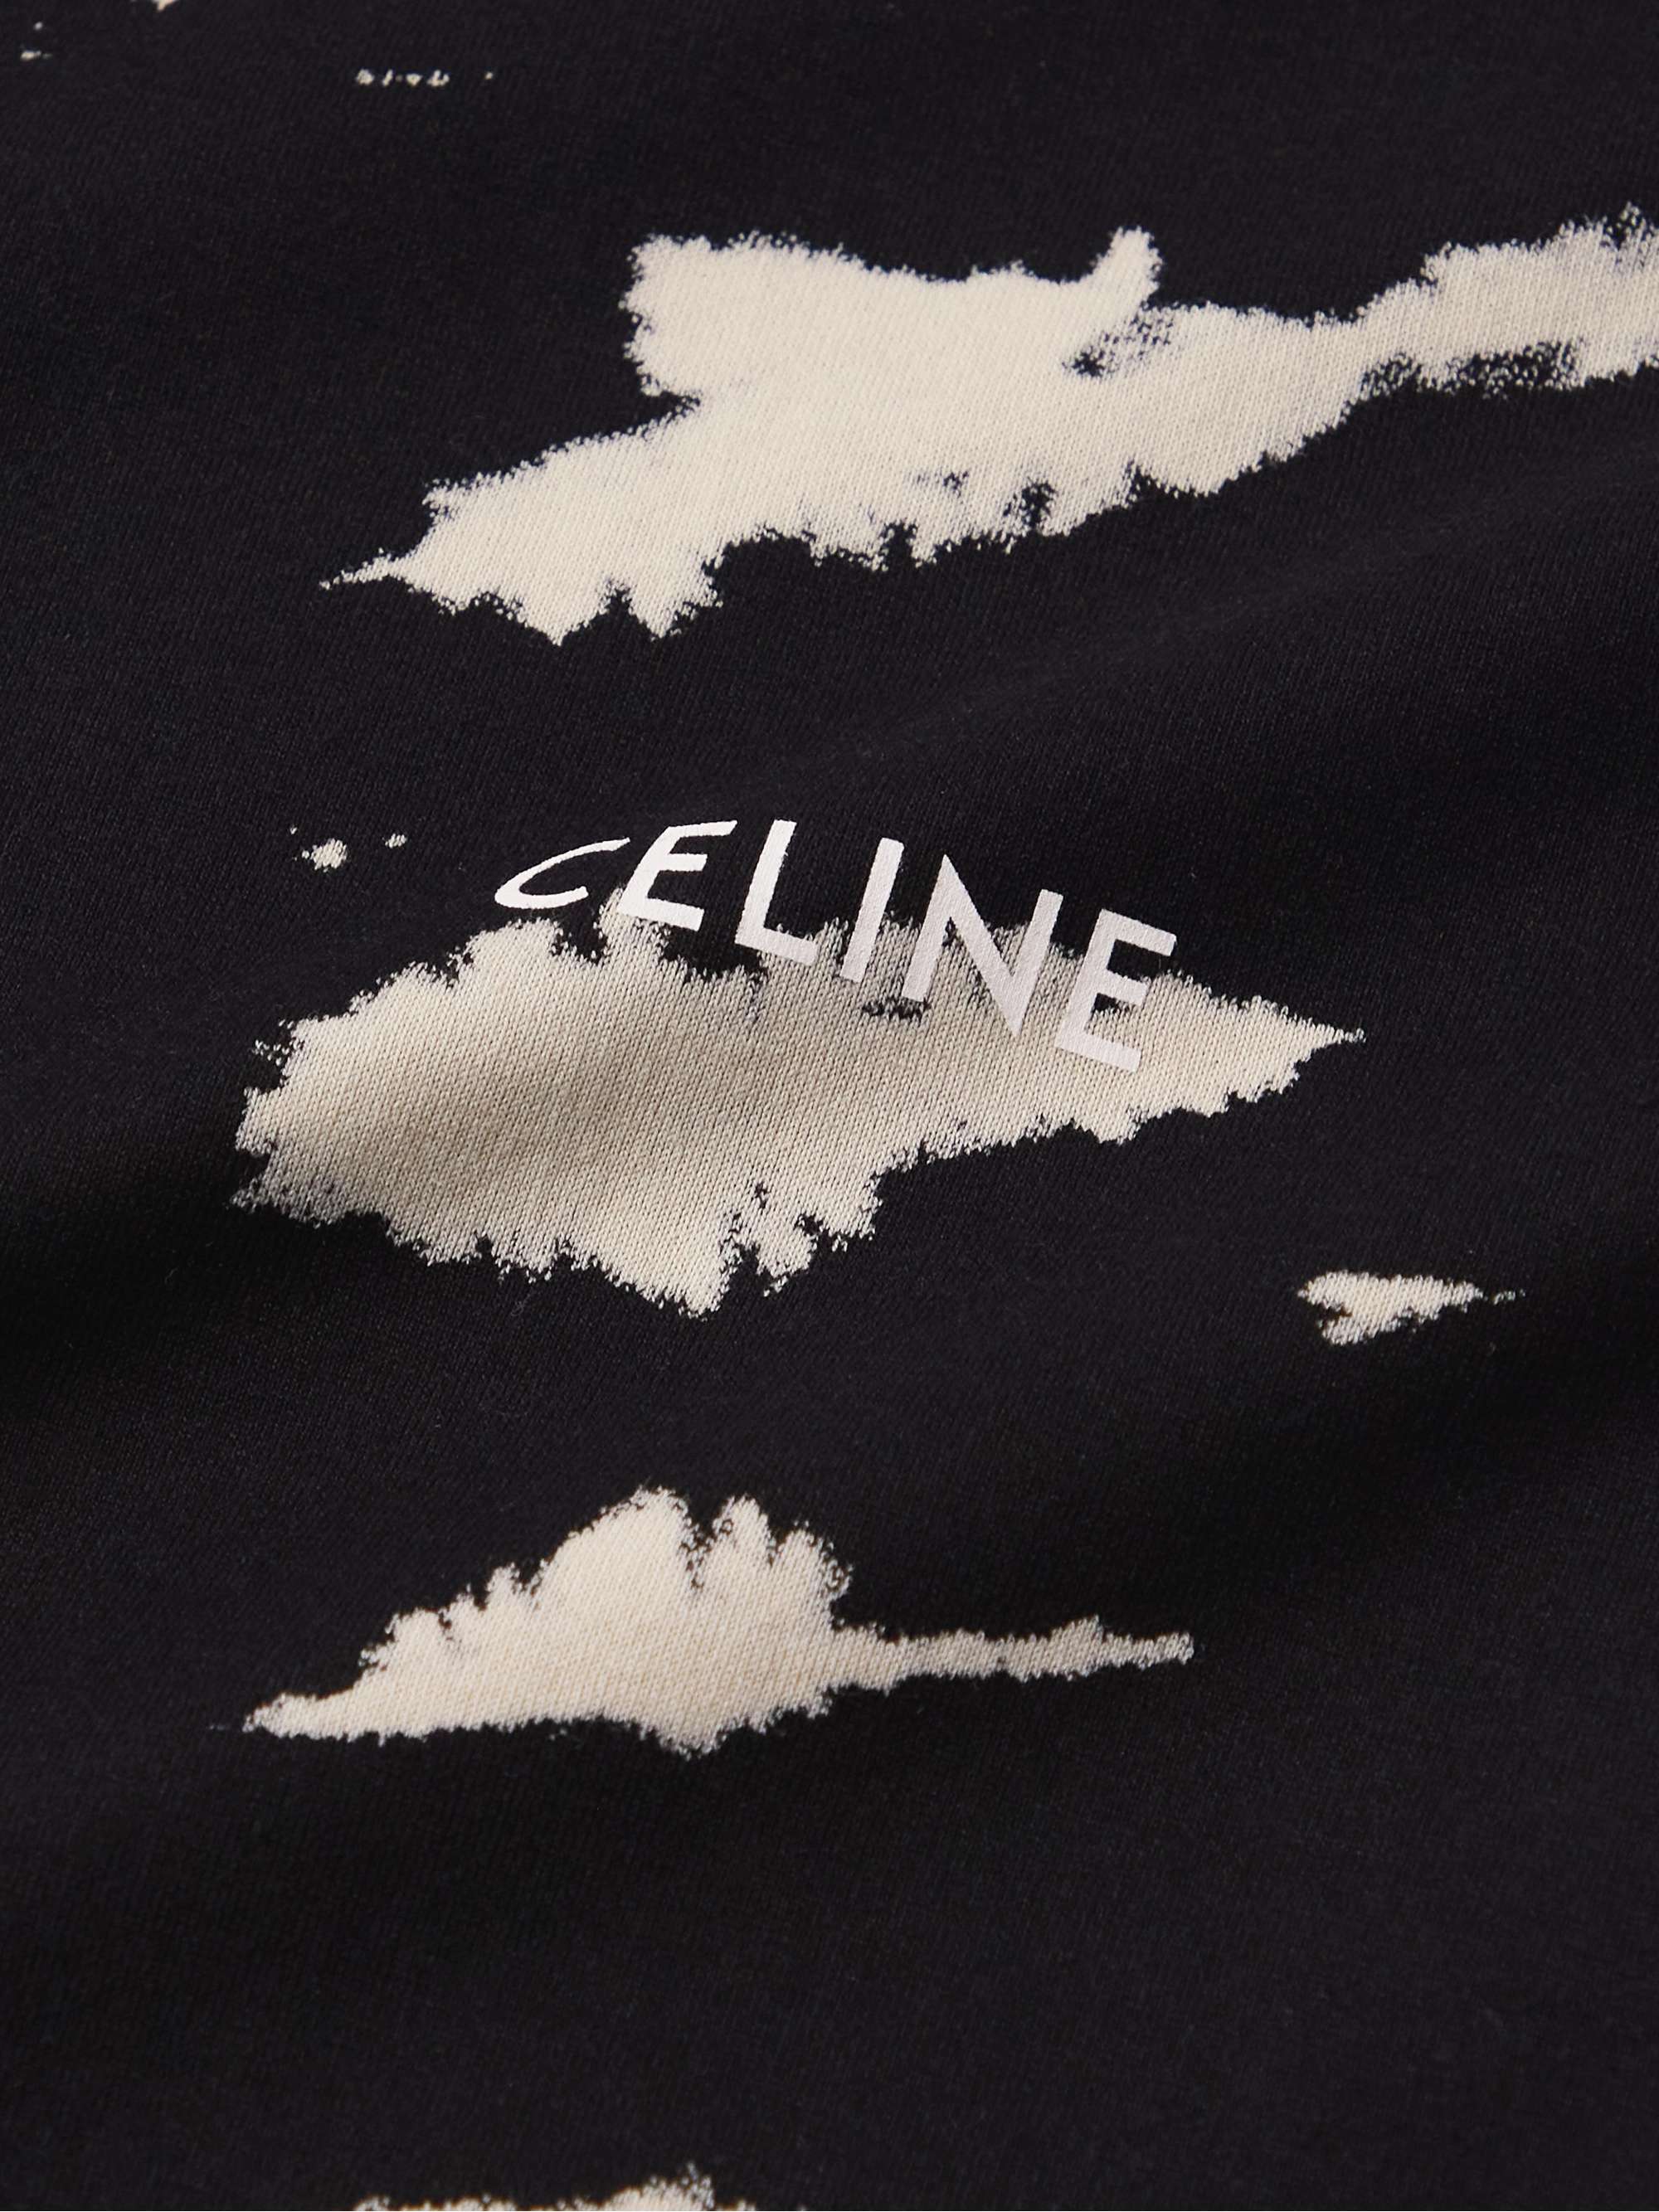 CELINE HOMME Tie-Dyed Logo-Print Cotton-Jersey T-Shirt